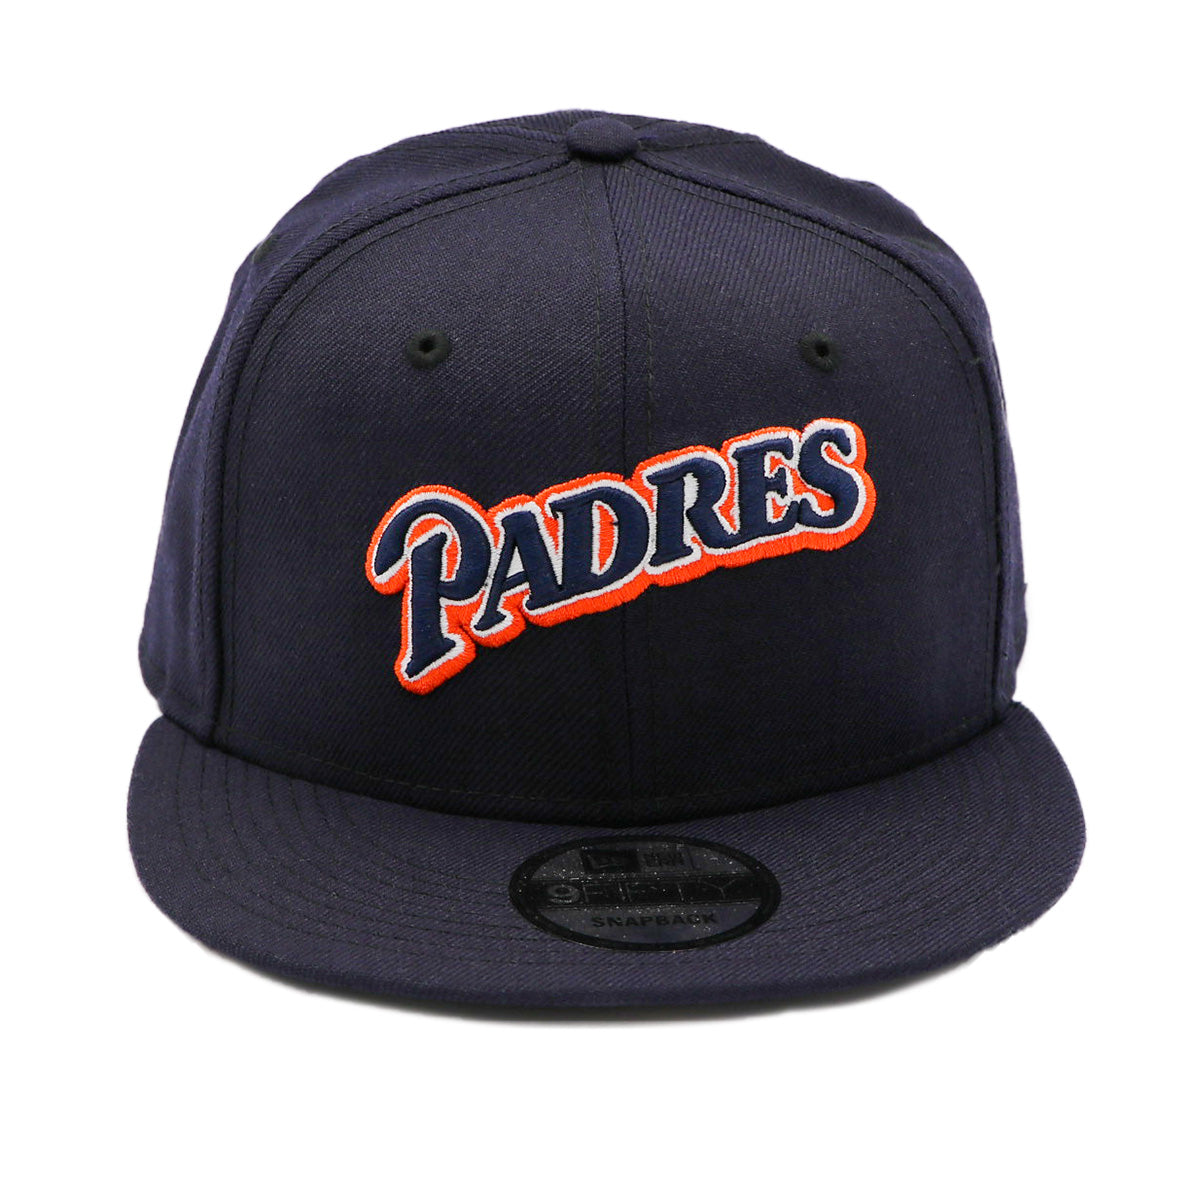 San Diego Padres New Era MLB 9FIFTY 950 Original Fit Snapback Cap